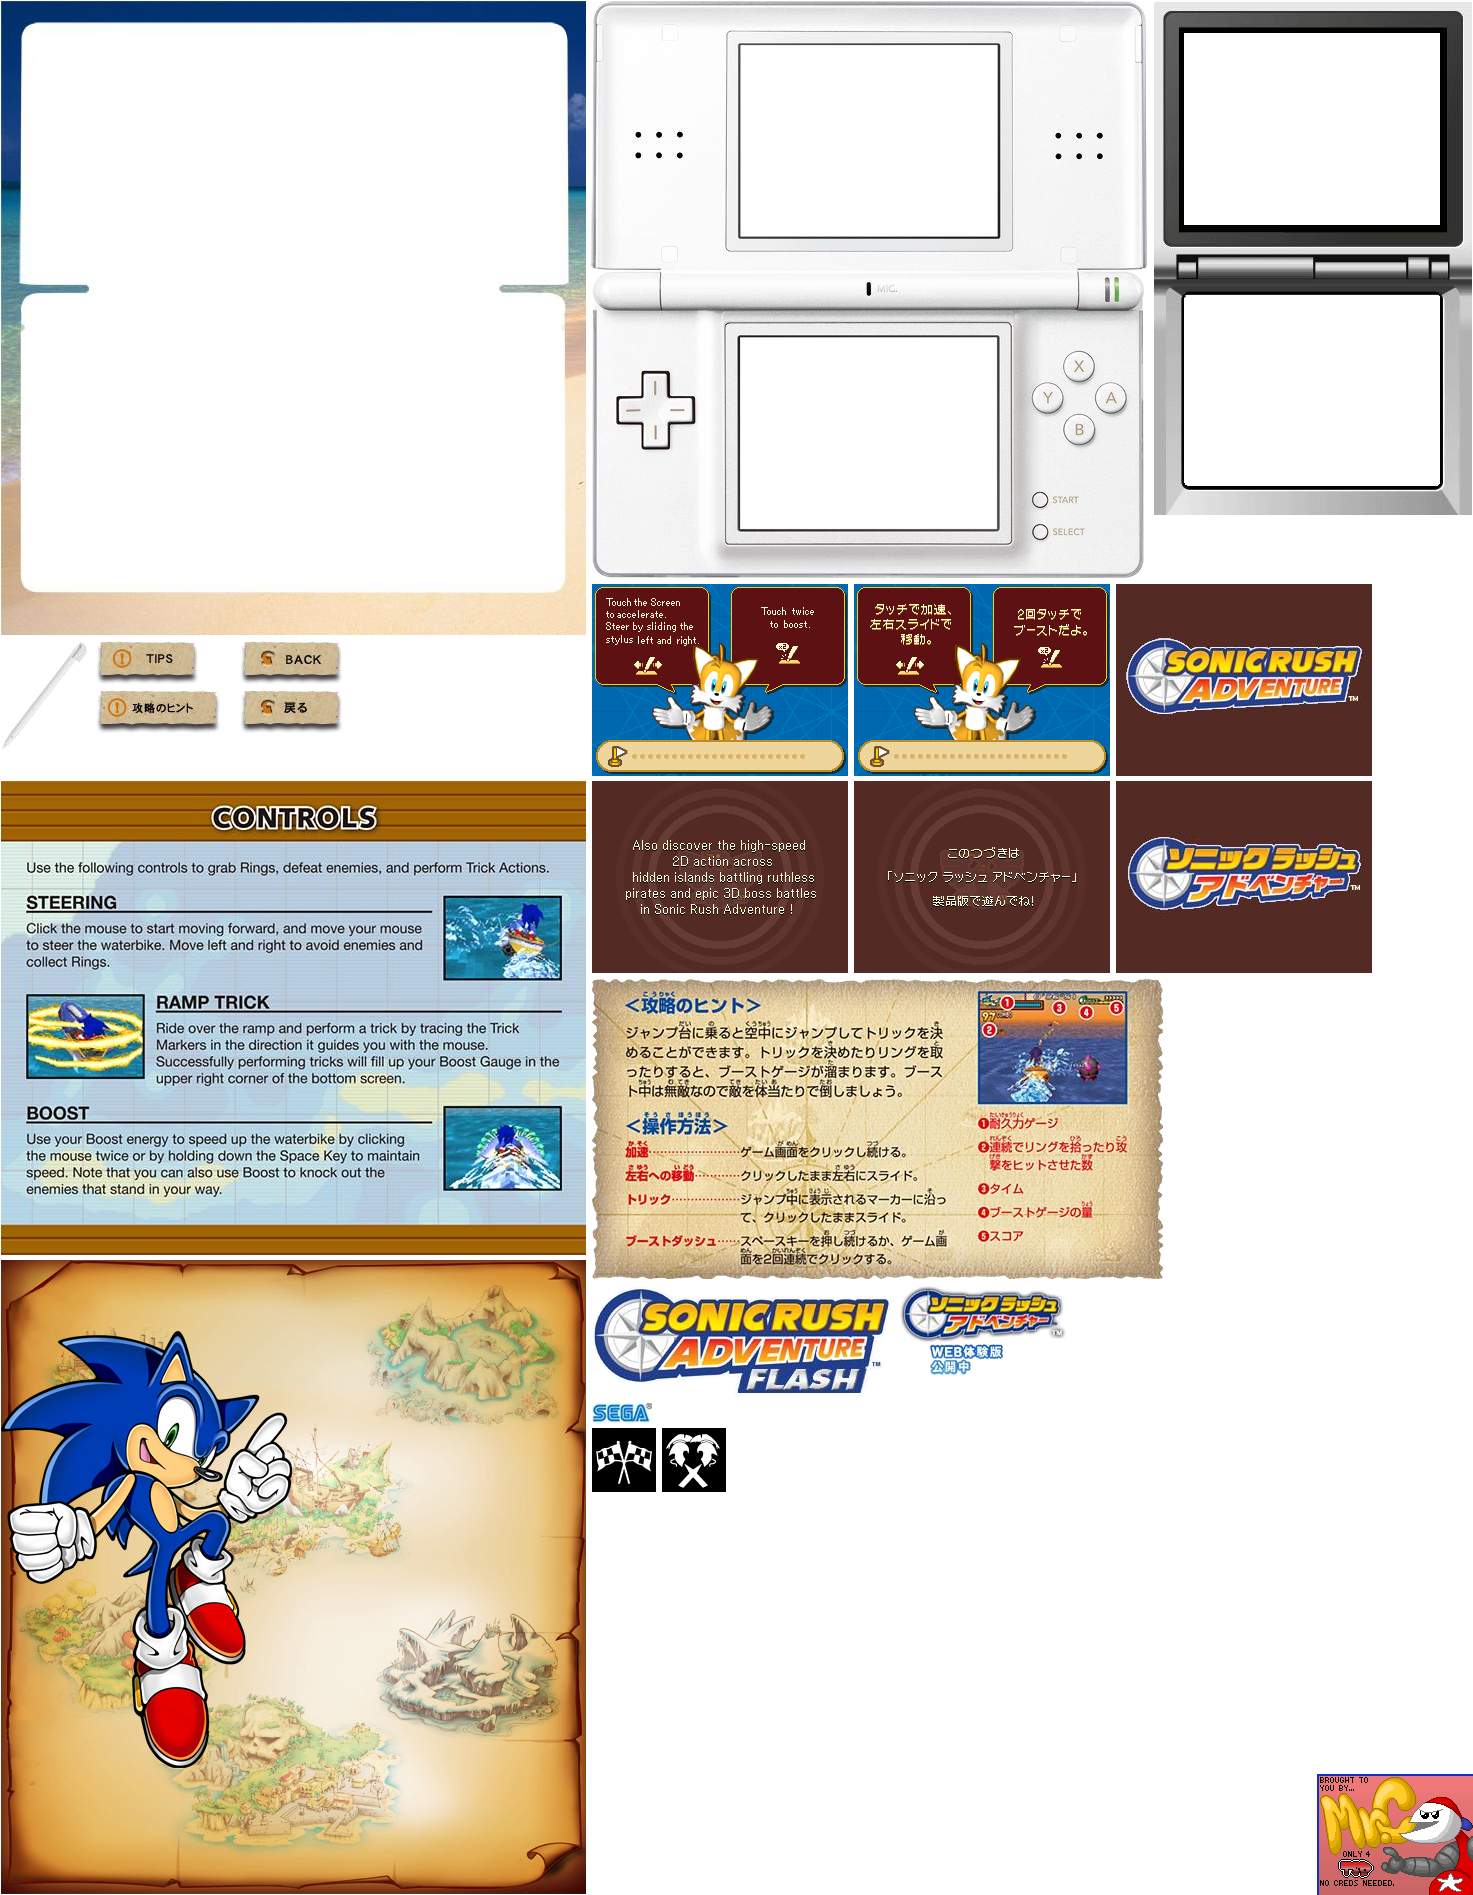 Main Menu and Nintendo DS Background